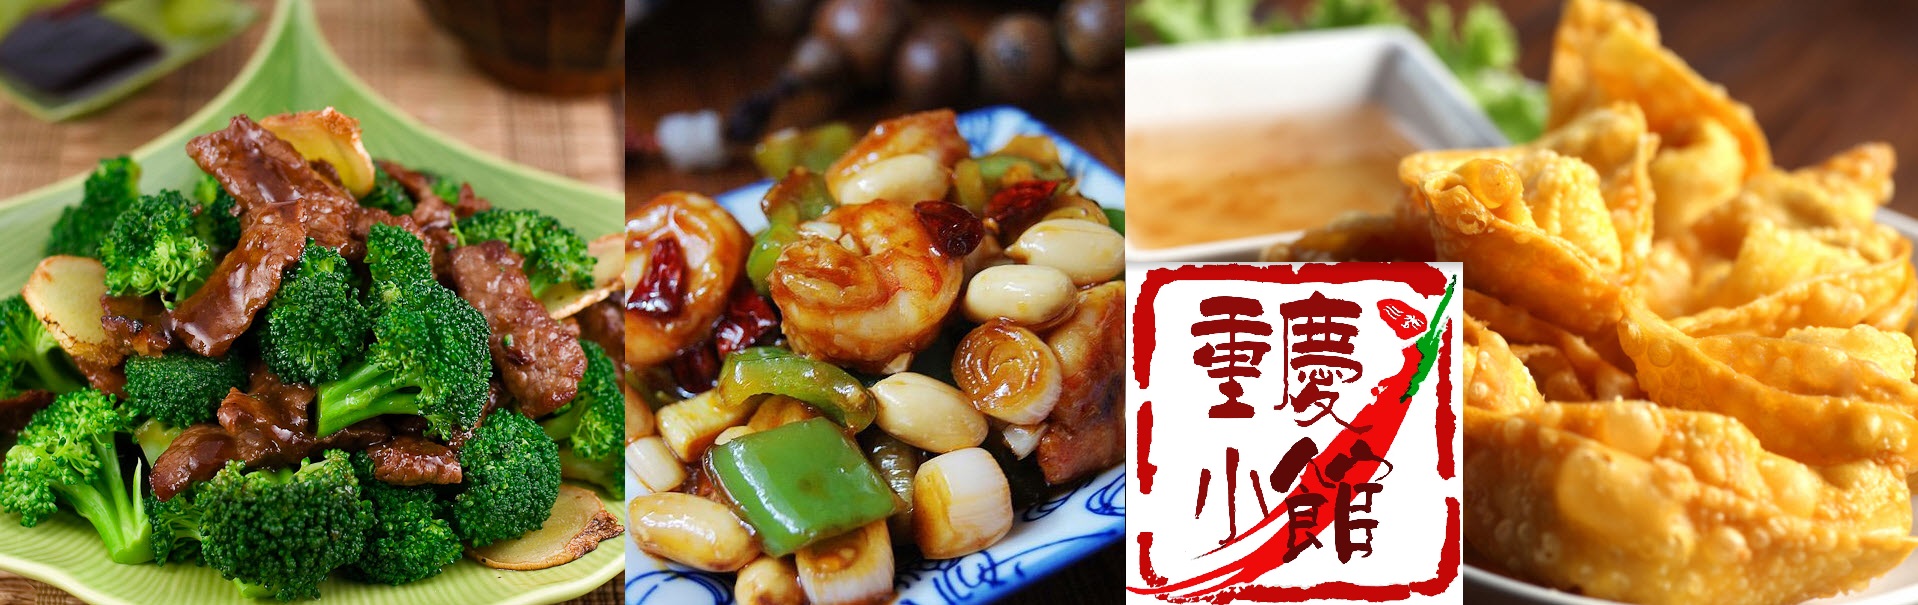 Gourmet China Order Online Greensboro Nc Chinese Food